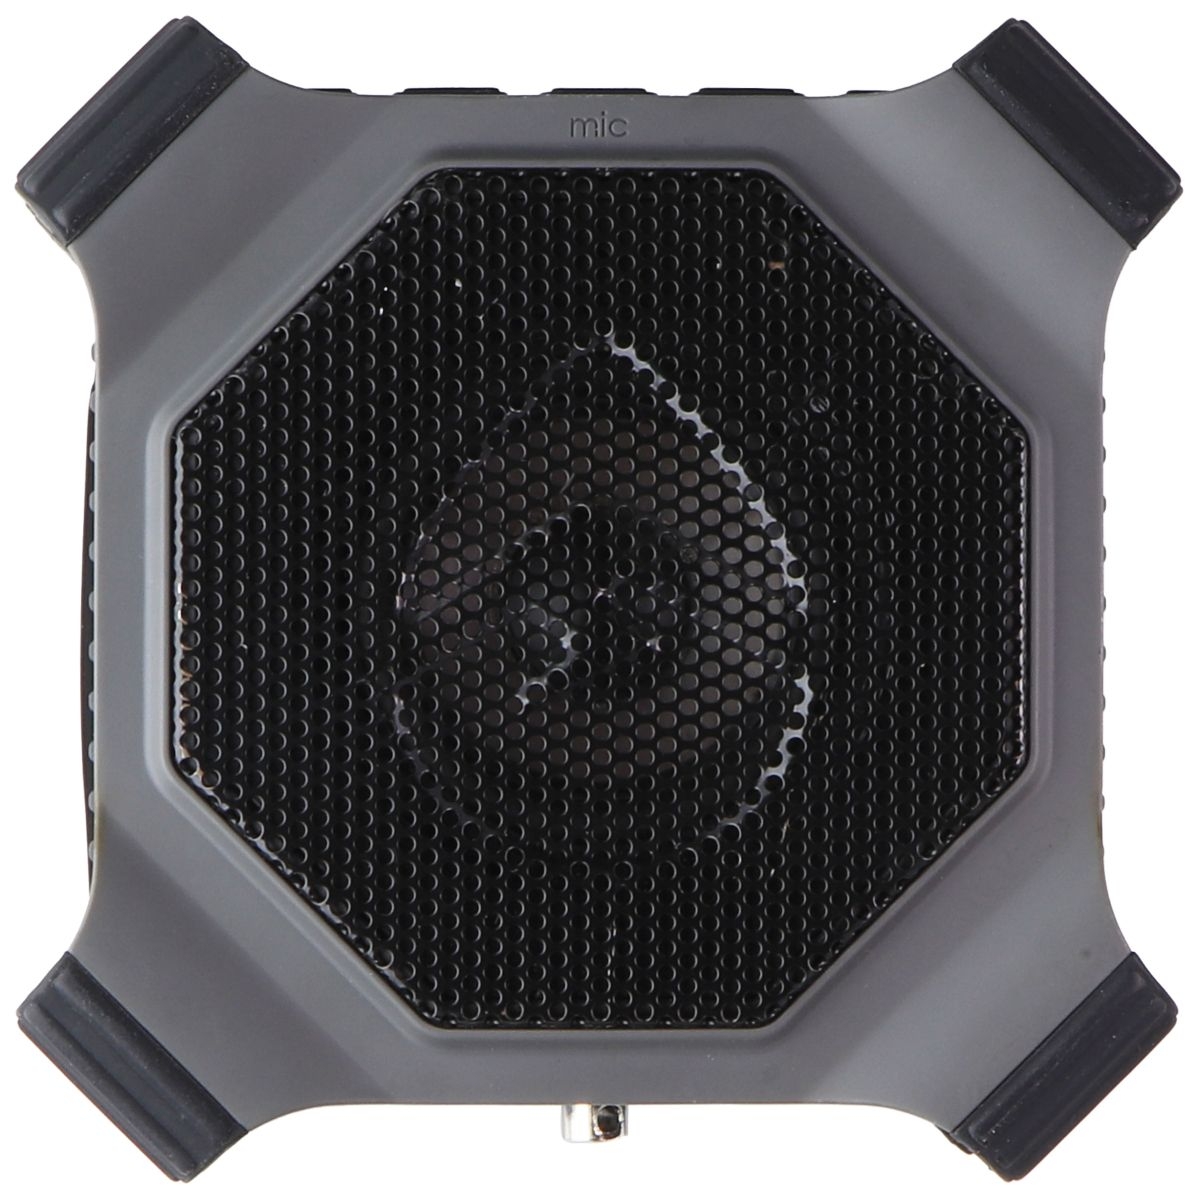 ECOXGEAR EcoEdge+ Waterproof Bluetooth LED Lit Speaker - Gray (Very Good) - image 2 of 5